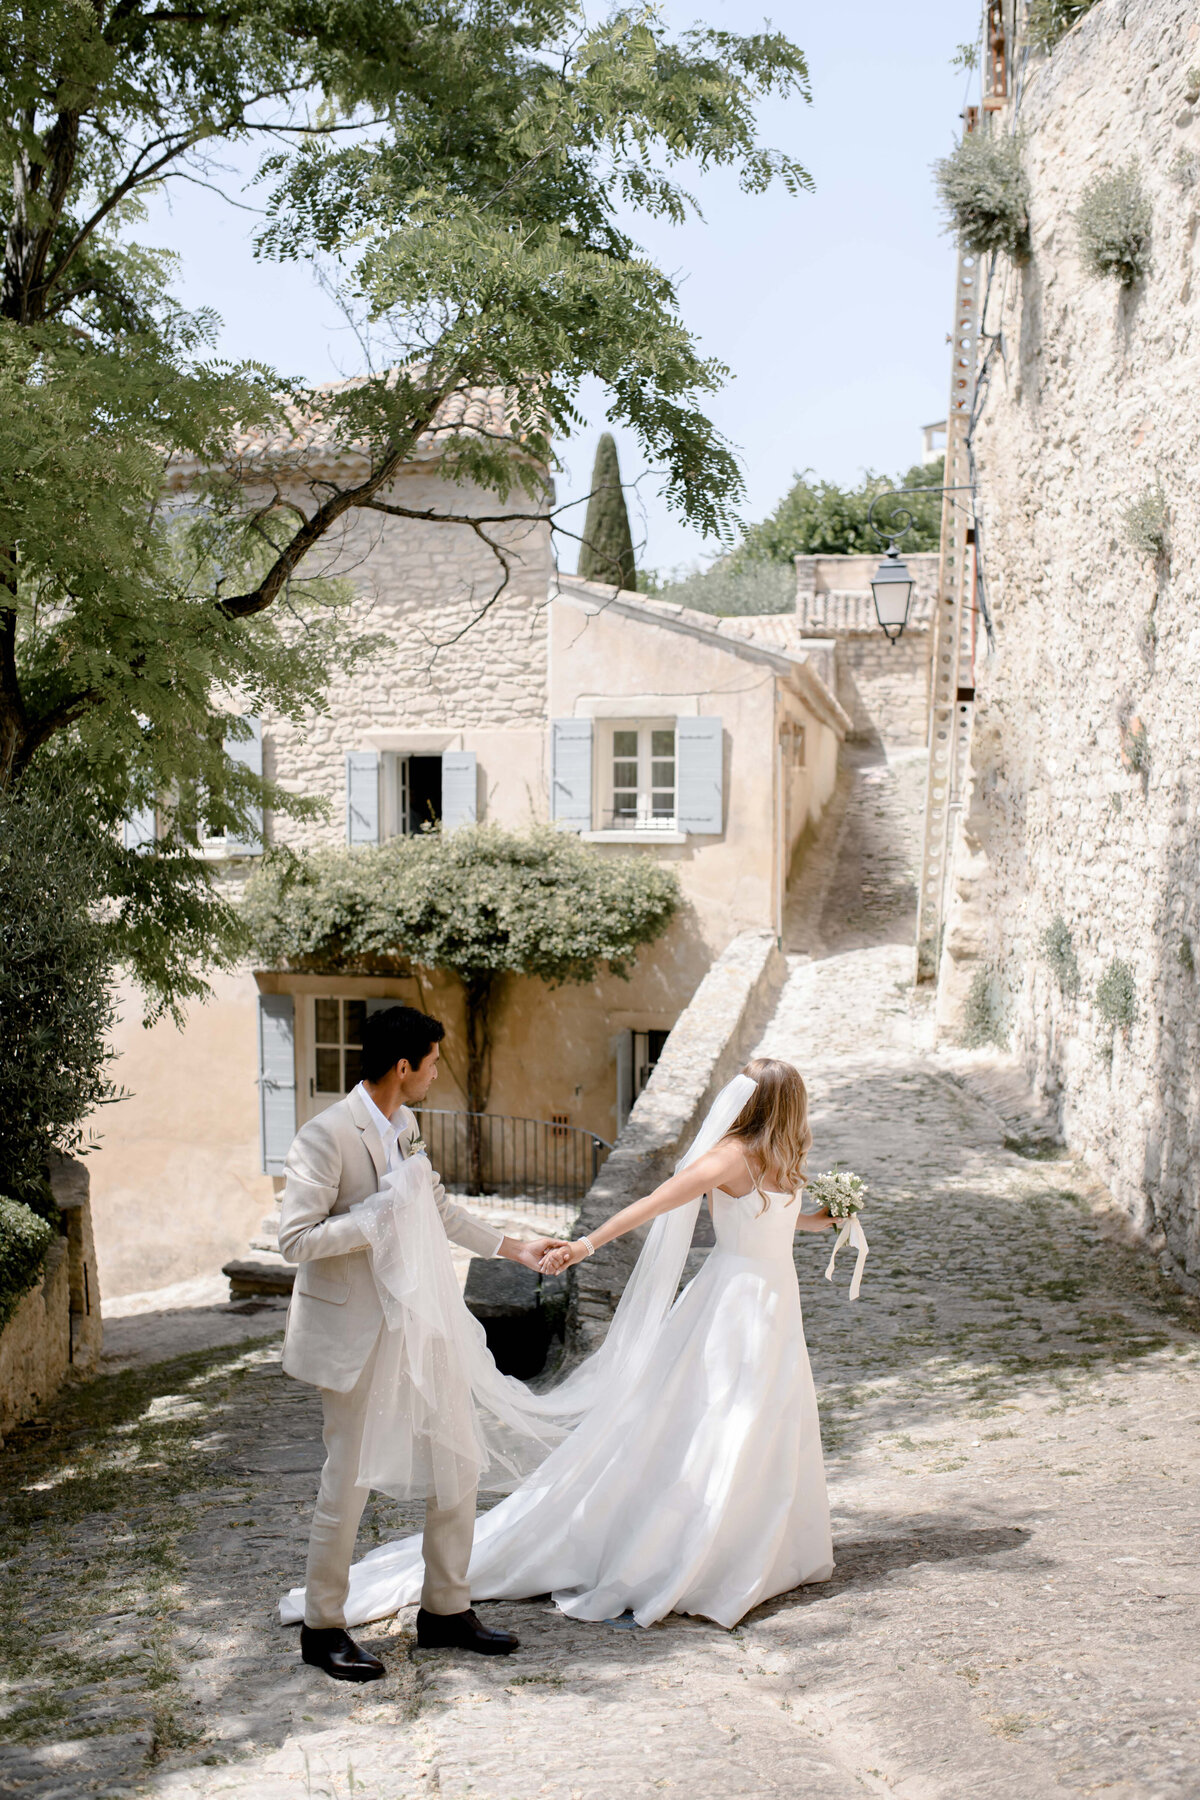 Flora_And_Grace_Provence_Editorial_Wedding_Photographer-2 Kopie